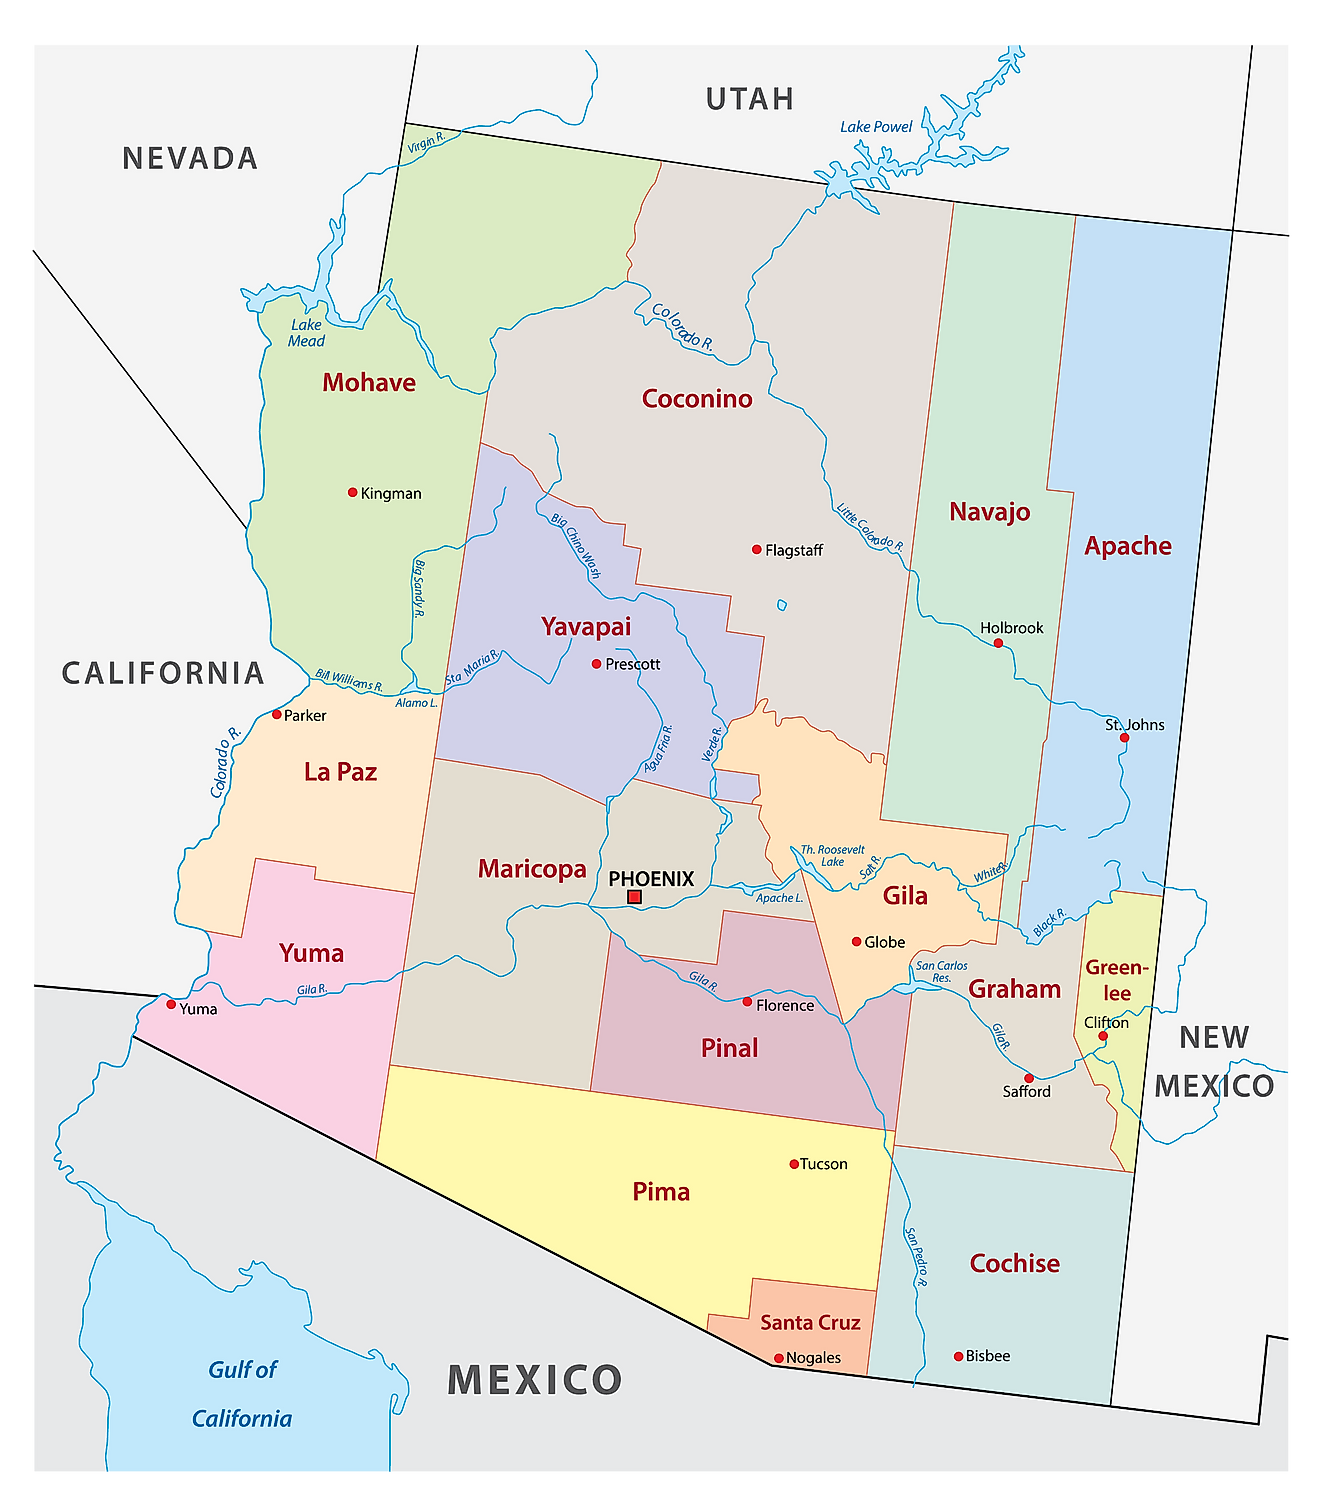 Phoenix Arizona On Us Map Arizona Maps & Facts - World Atlas